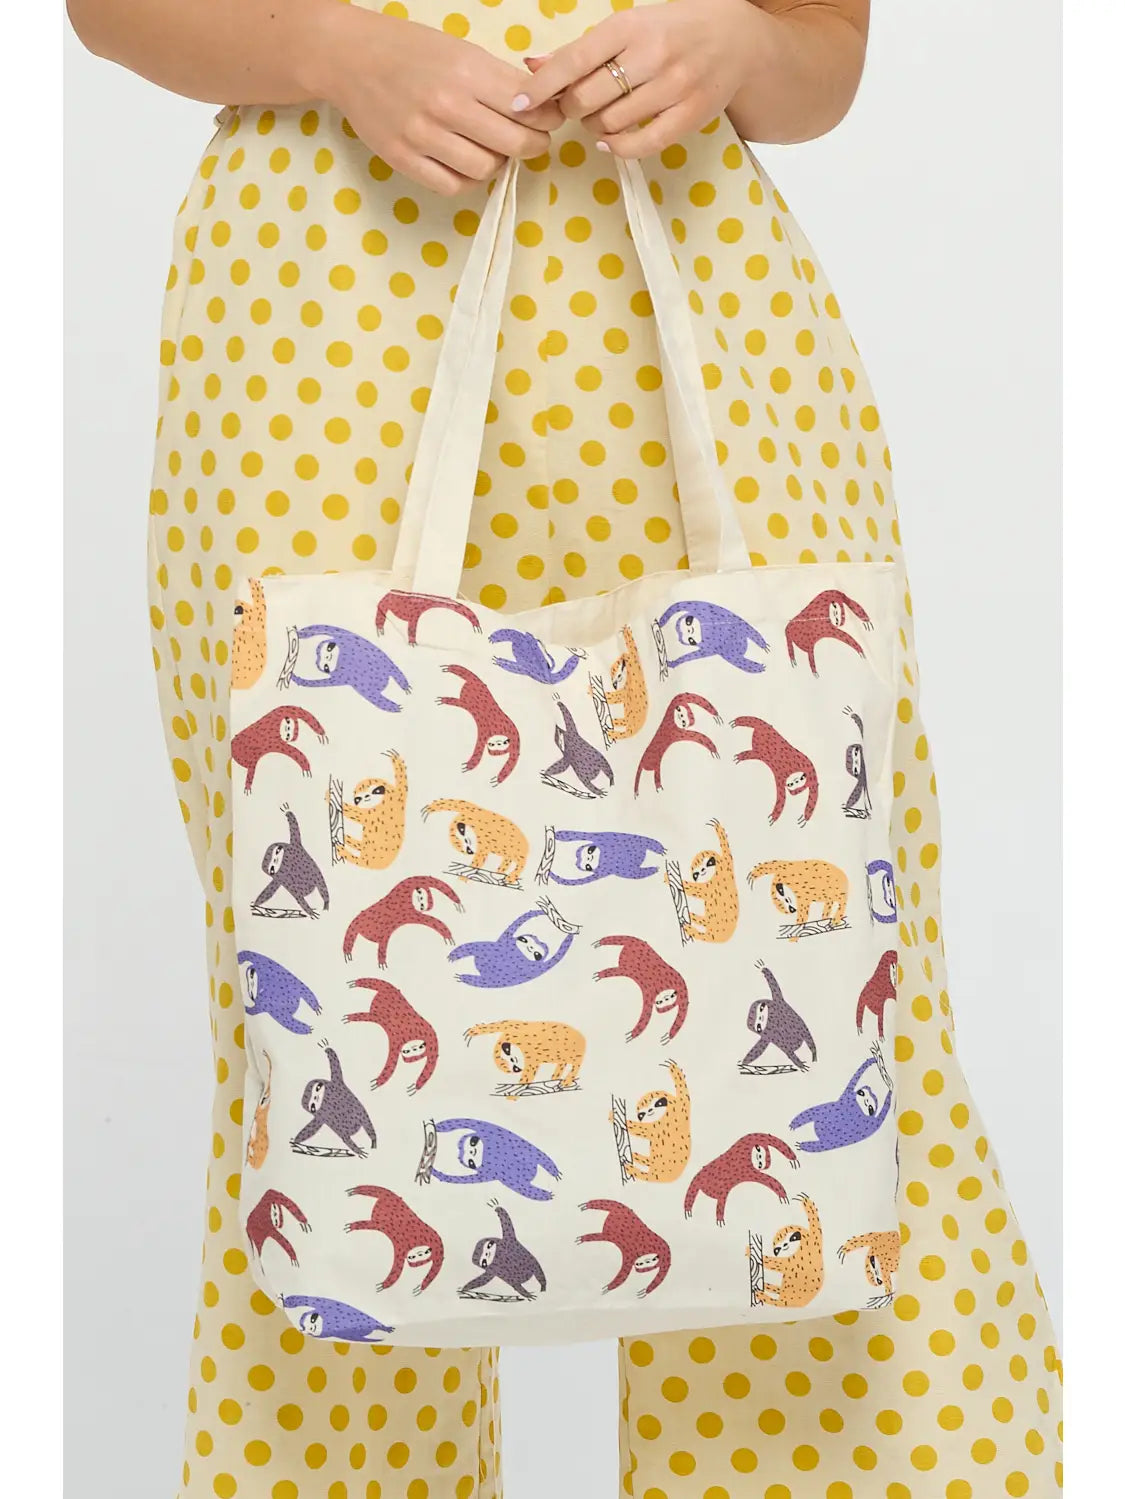 Colorful Sloth Print Tote Bags